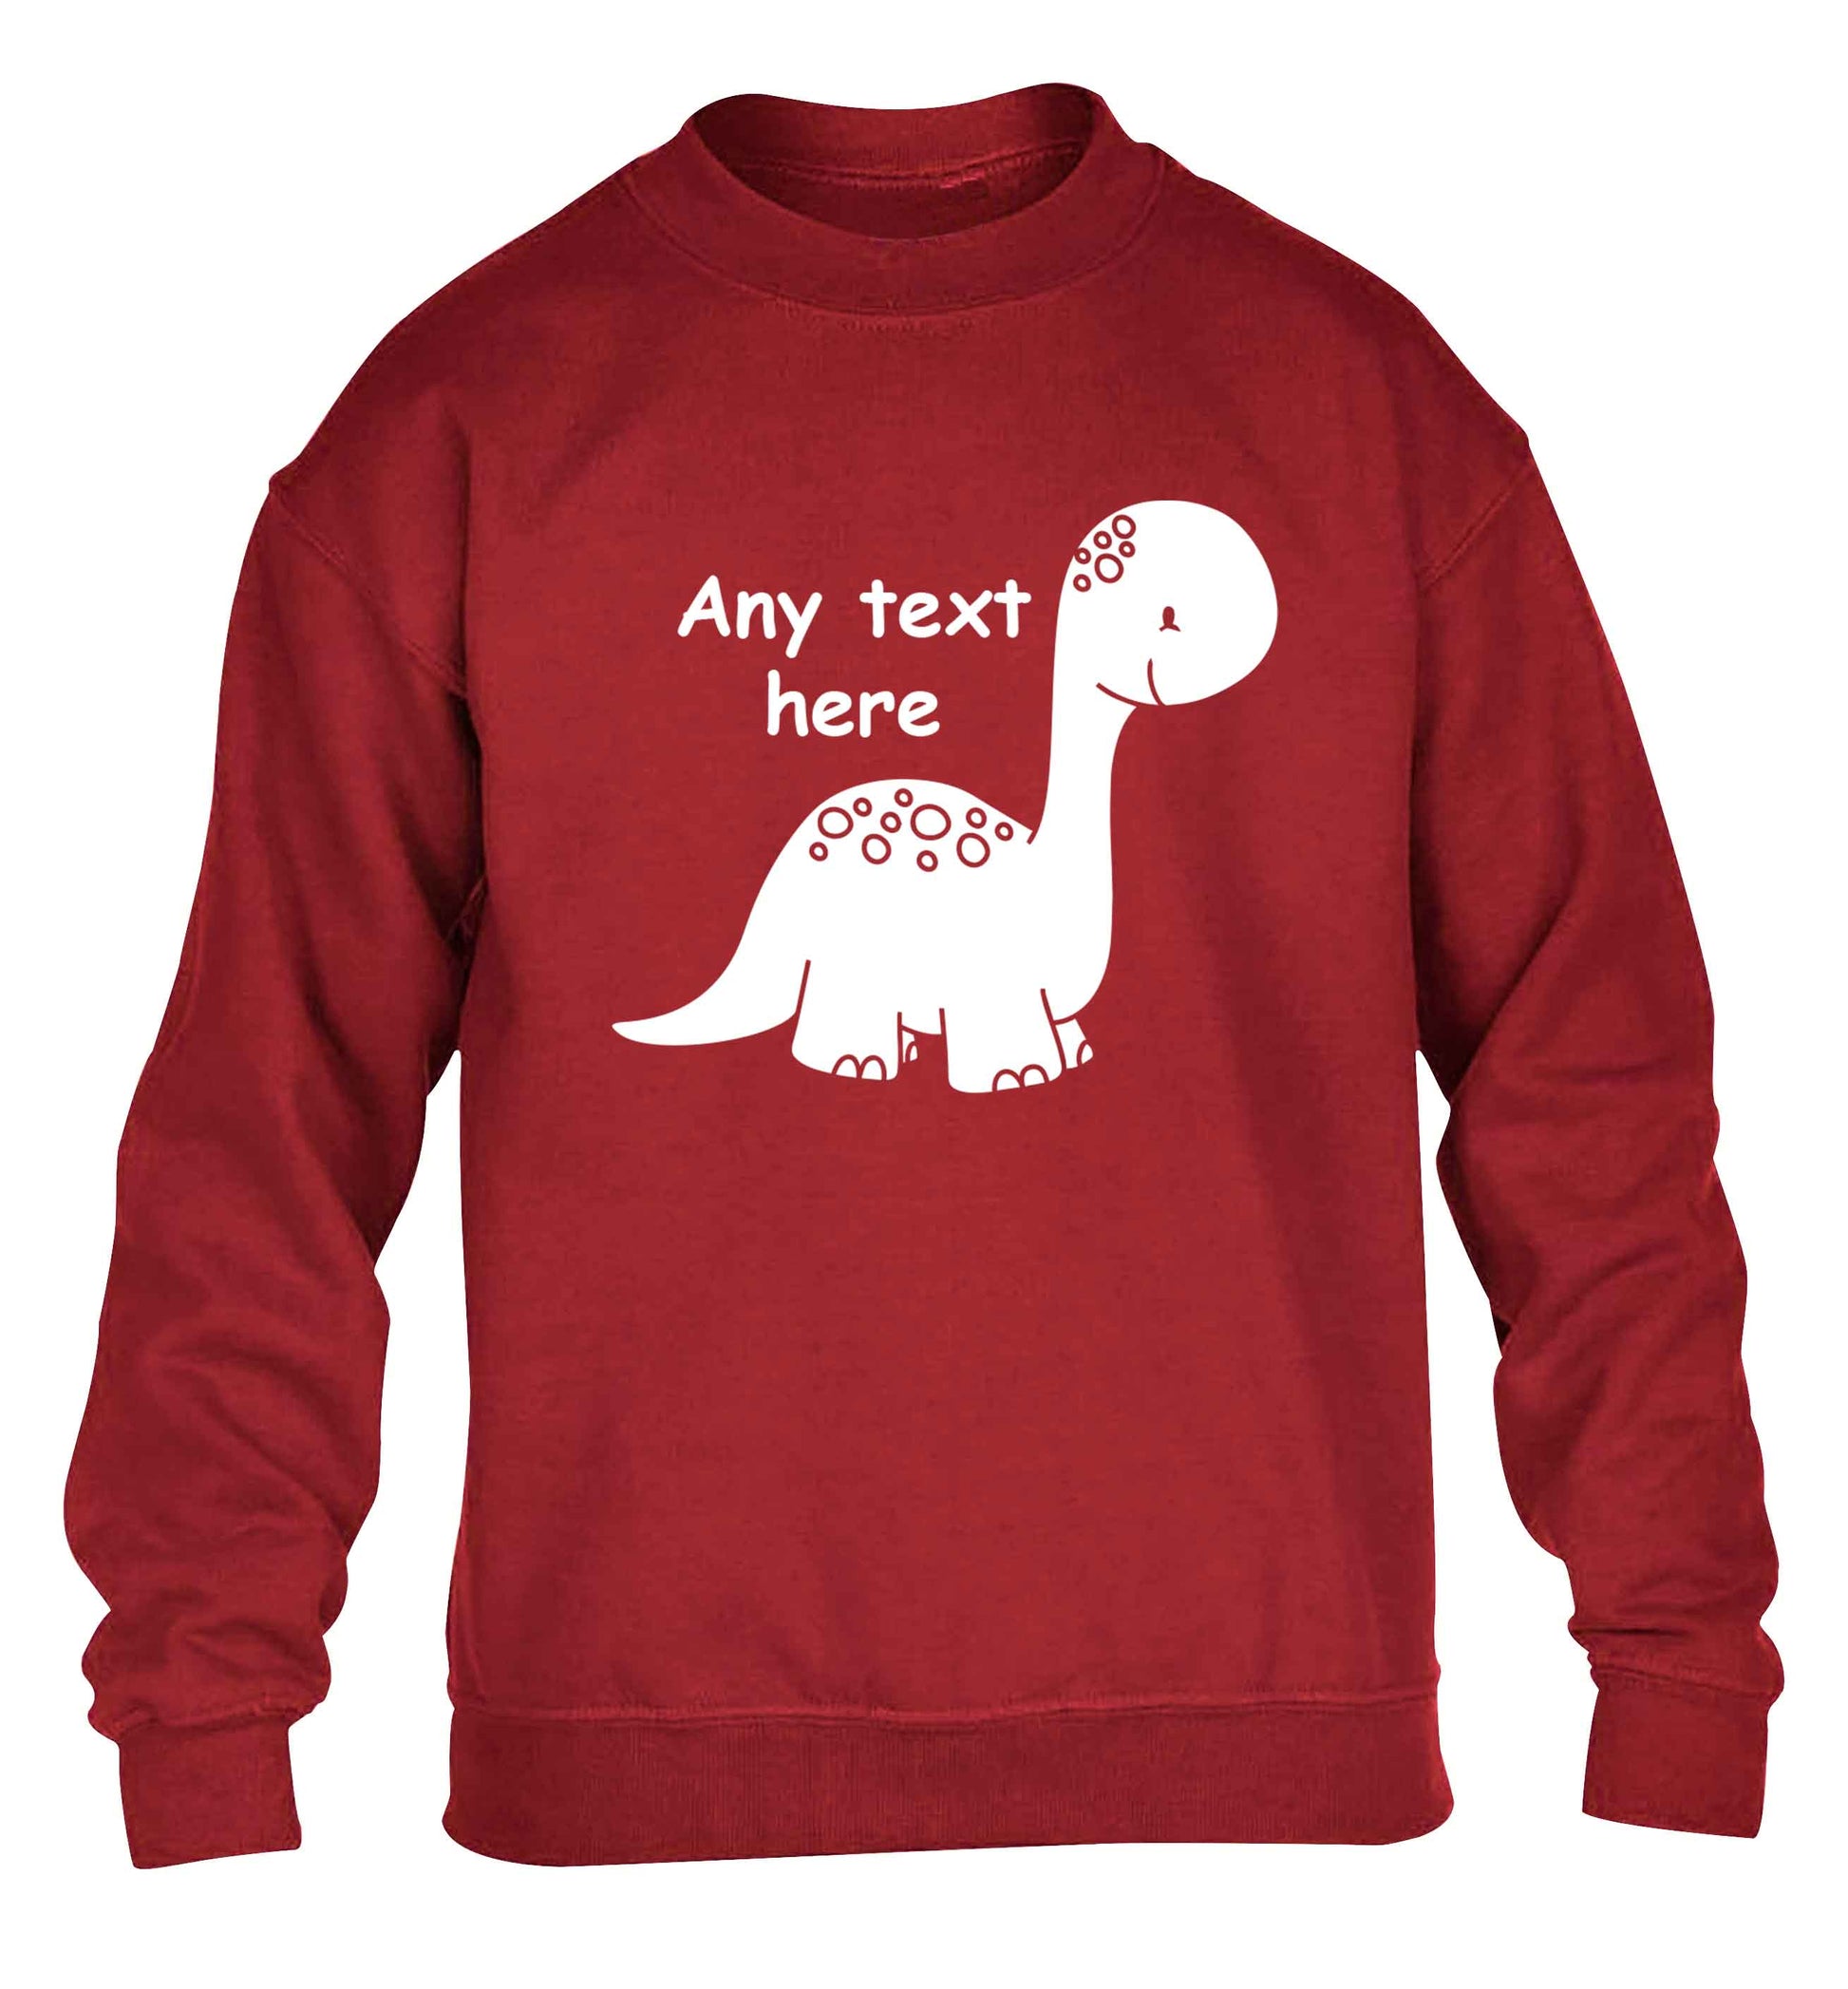 Dinosaur any text children's grey sweater 12-13 Years